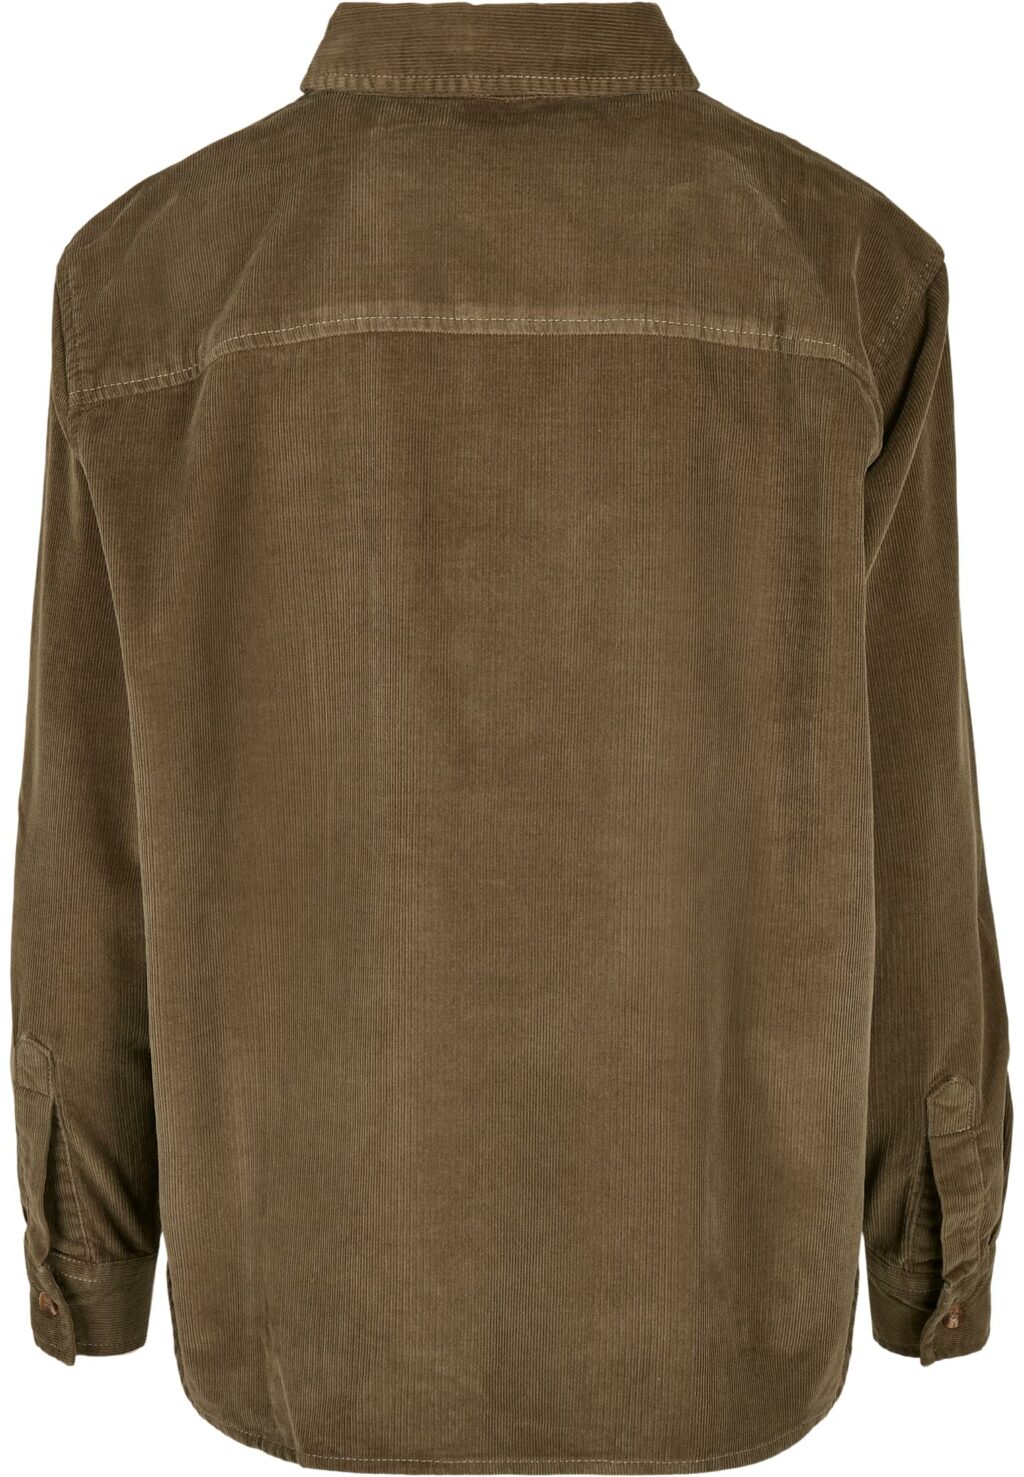 Urban Classics Ladies Corduroy Oversized Shirt olive TB3755